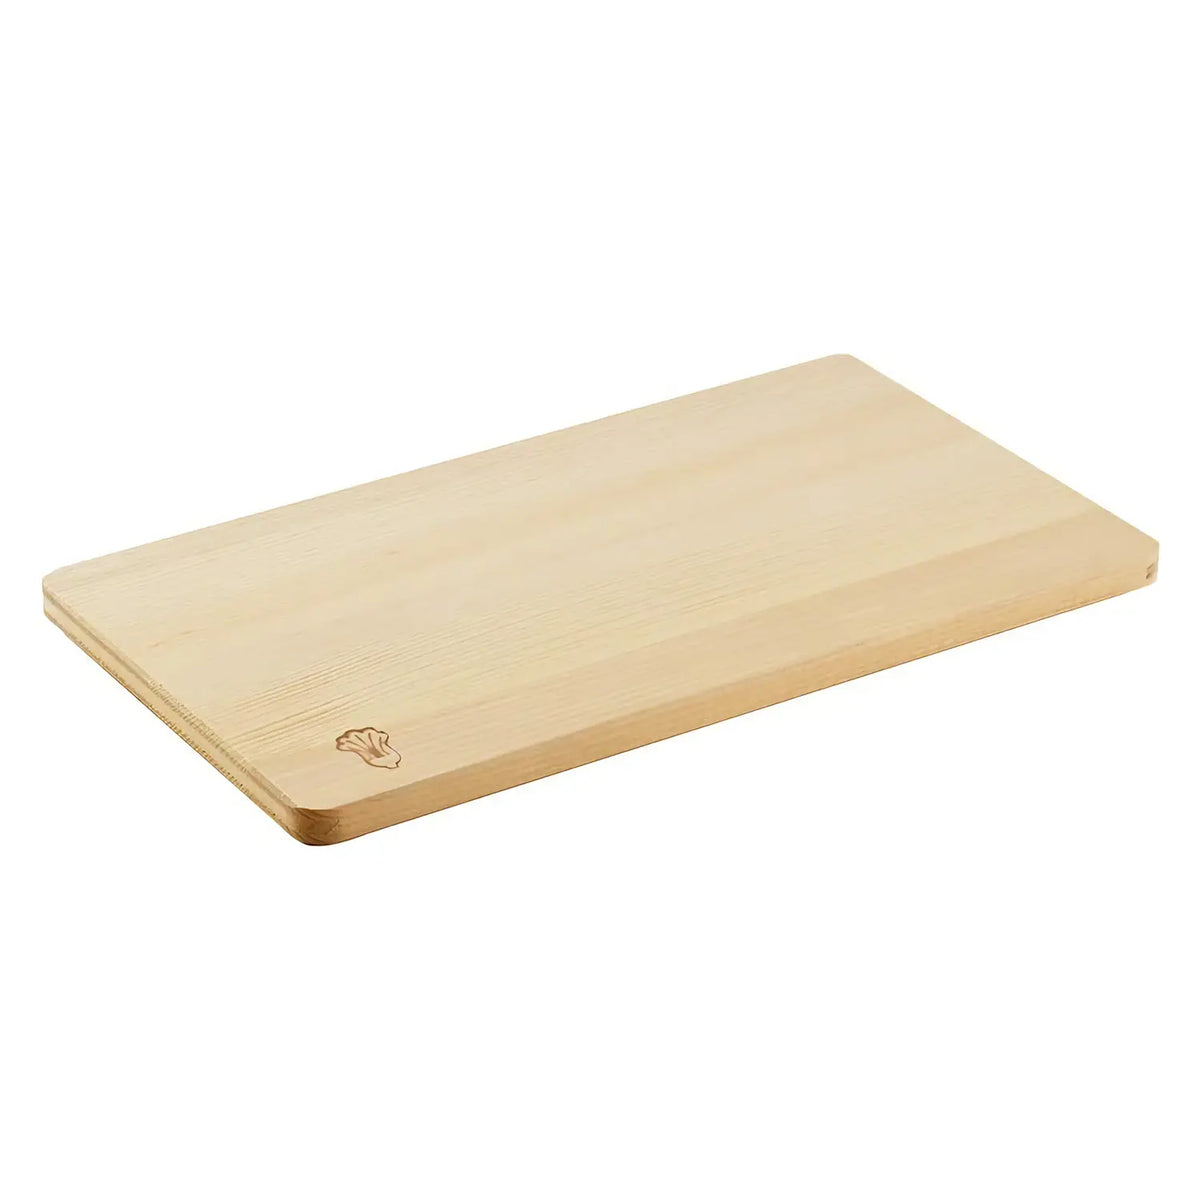 Yamacoh Anti-warp Processed Wooden Cutting Board